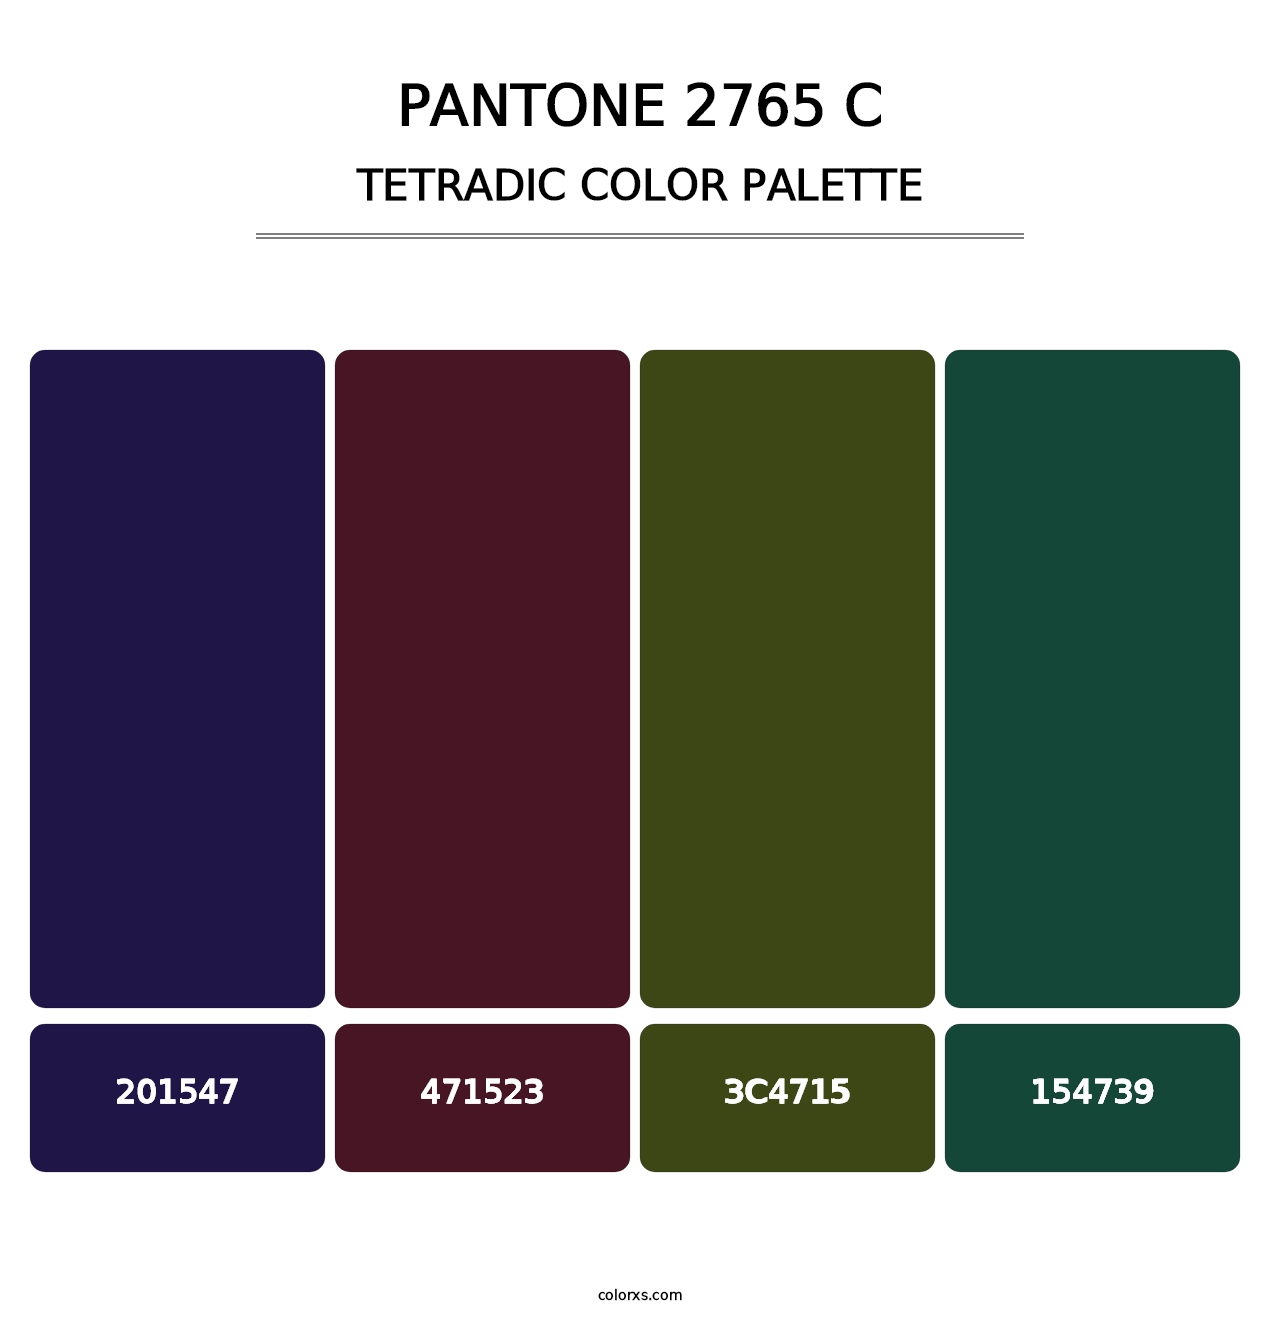 PANTONE 2765 C - Tetradic Color Palette